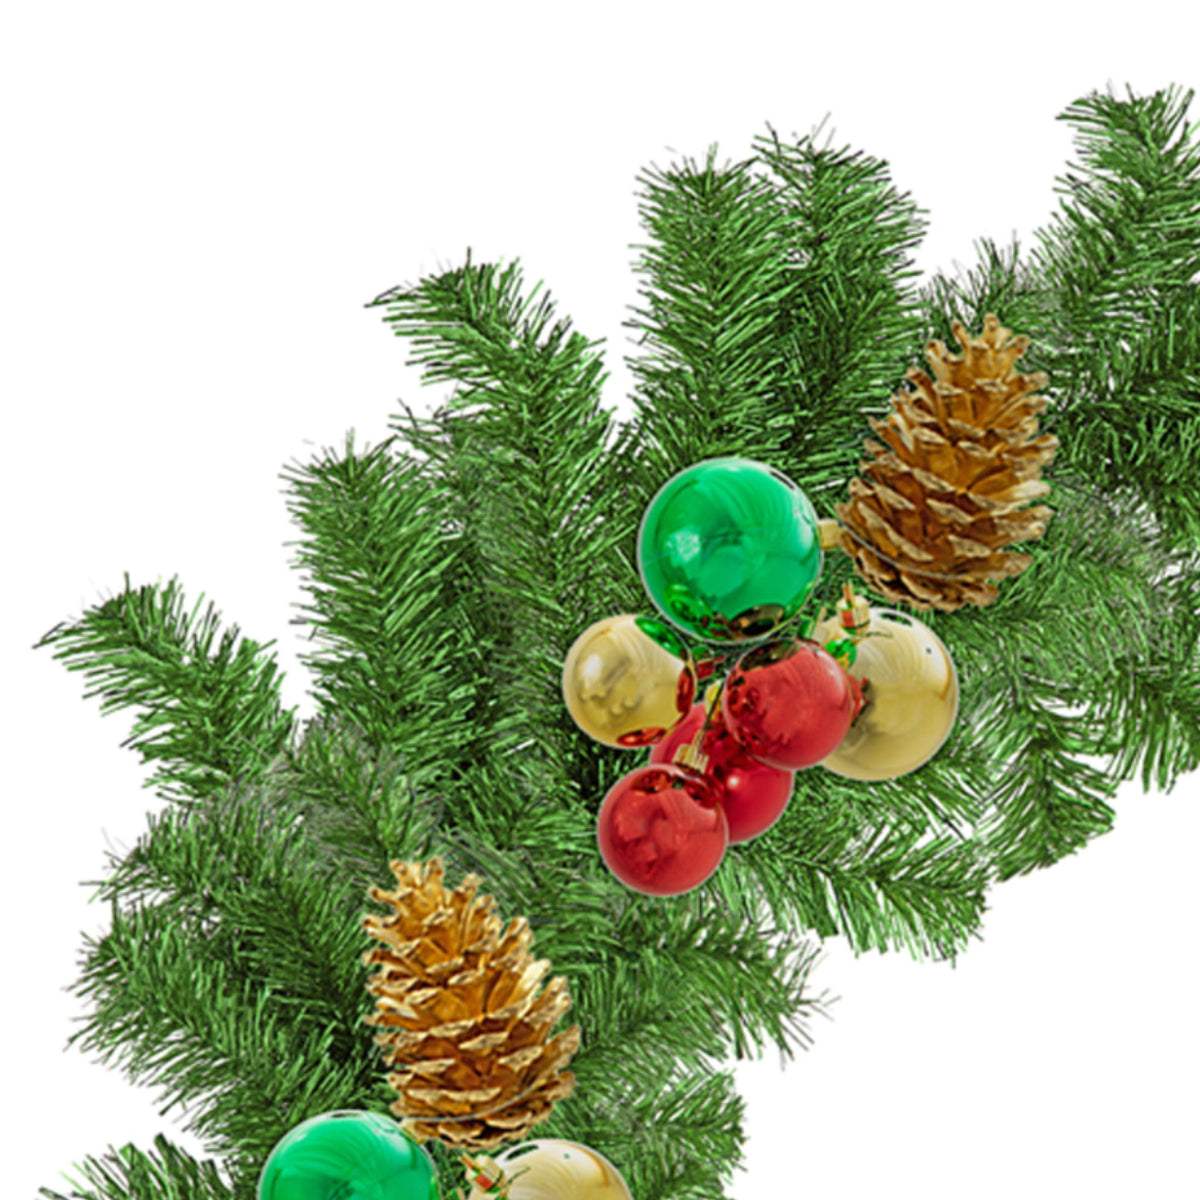 Evergreen Classic Christmas Wreaths